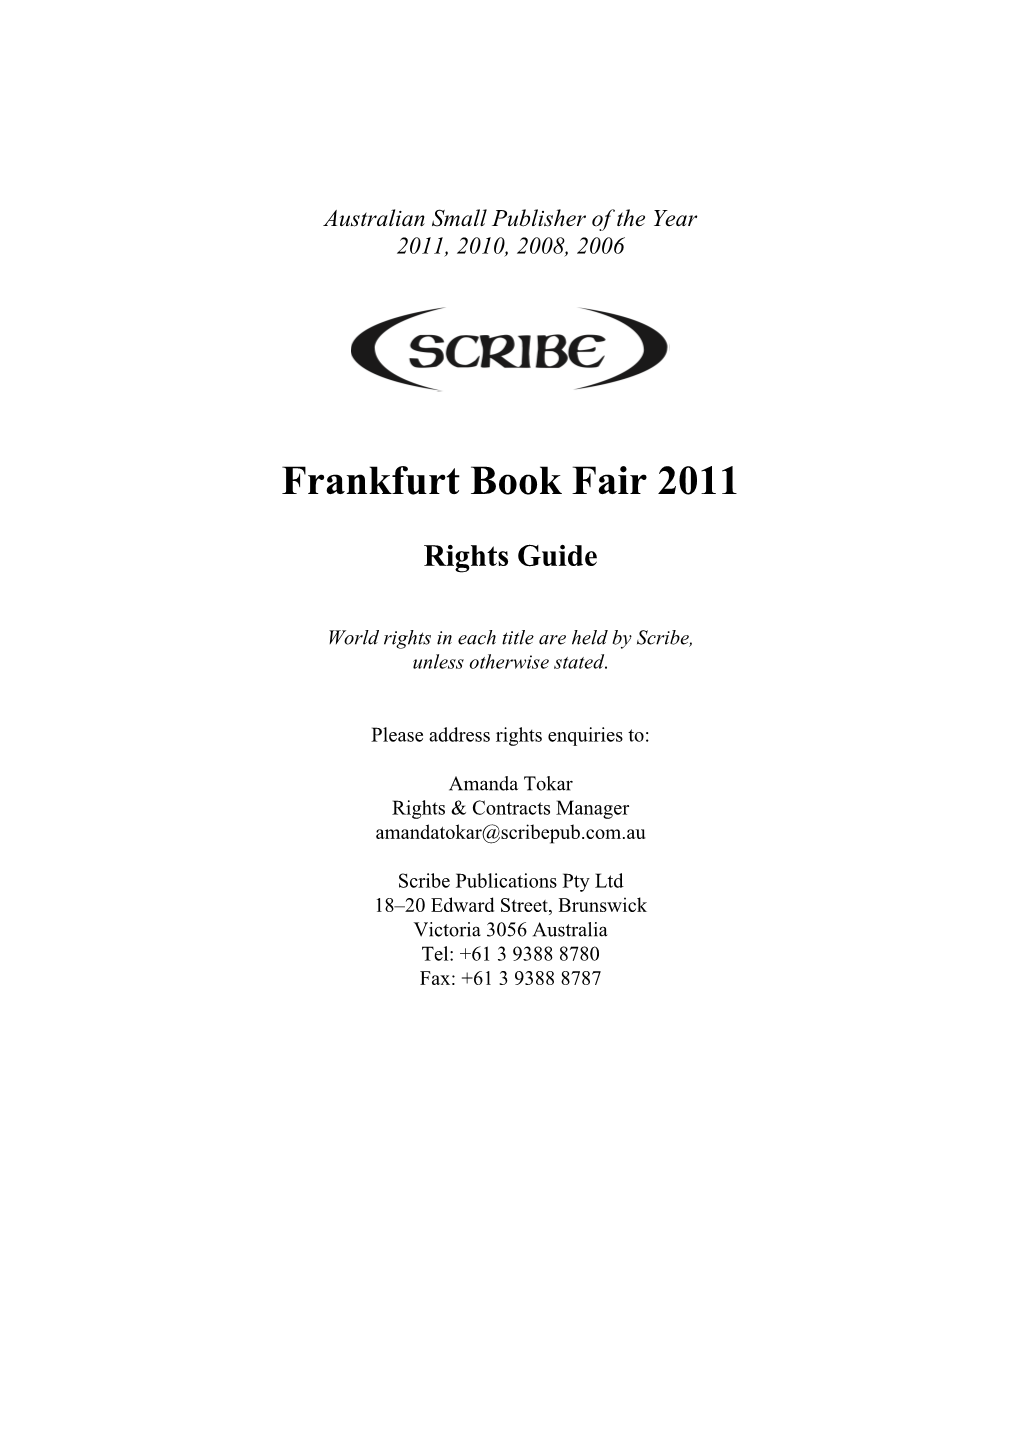 Scribe FBF 2011 Rights Guide